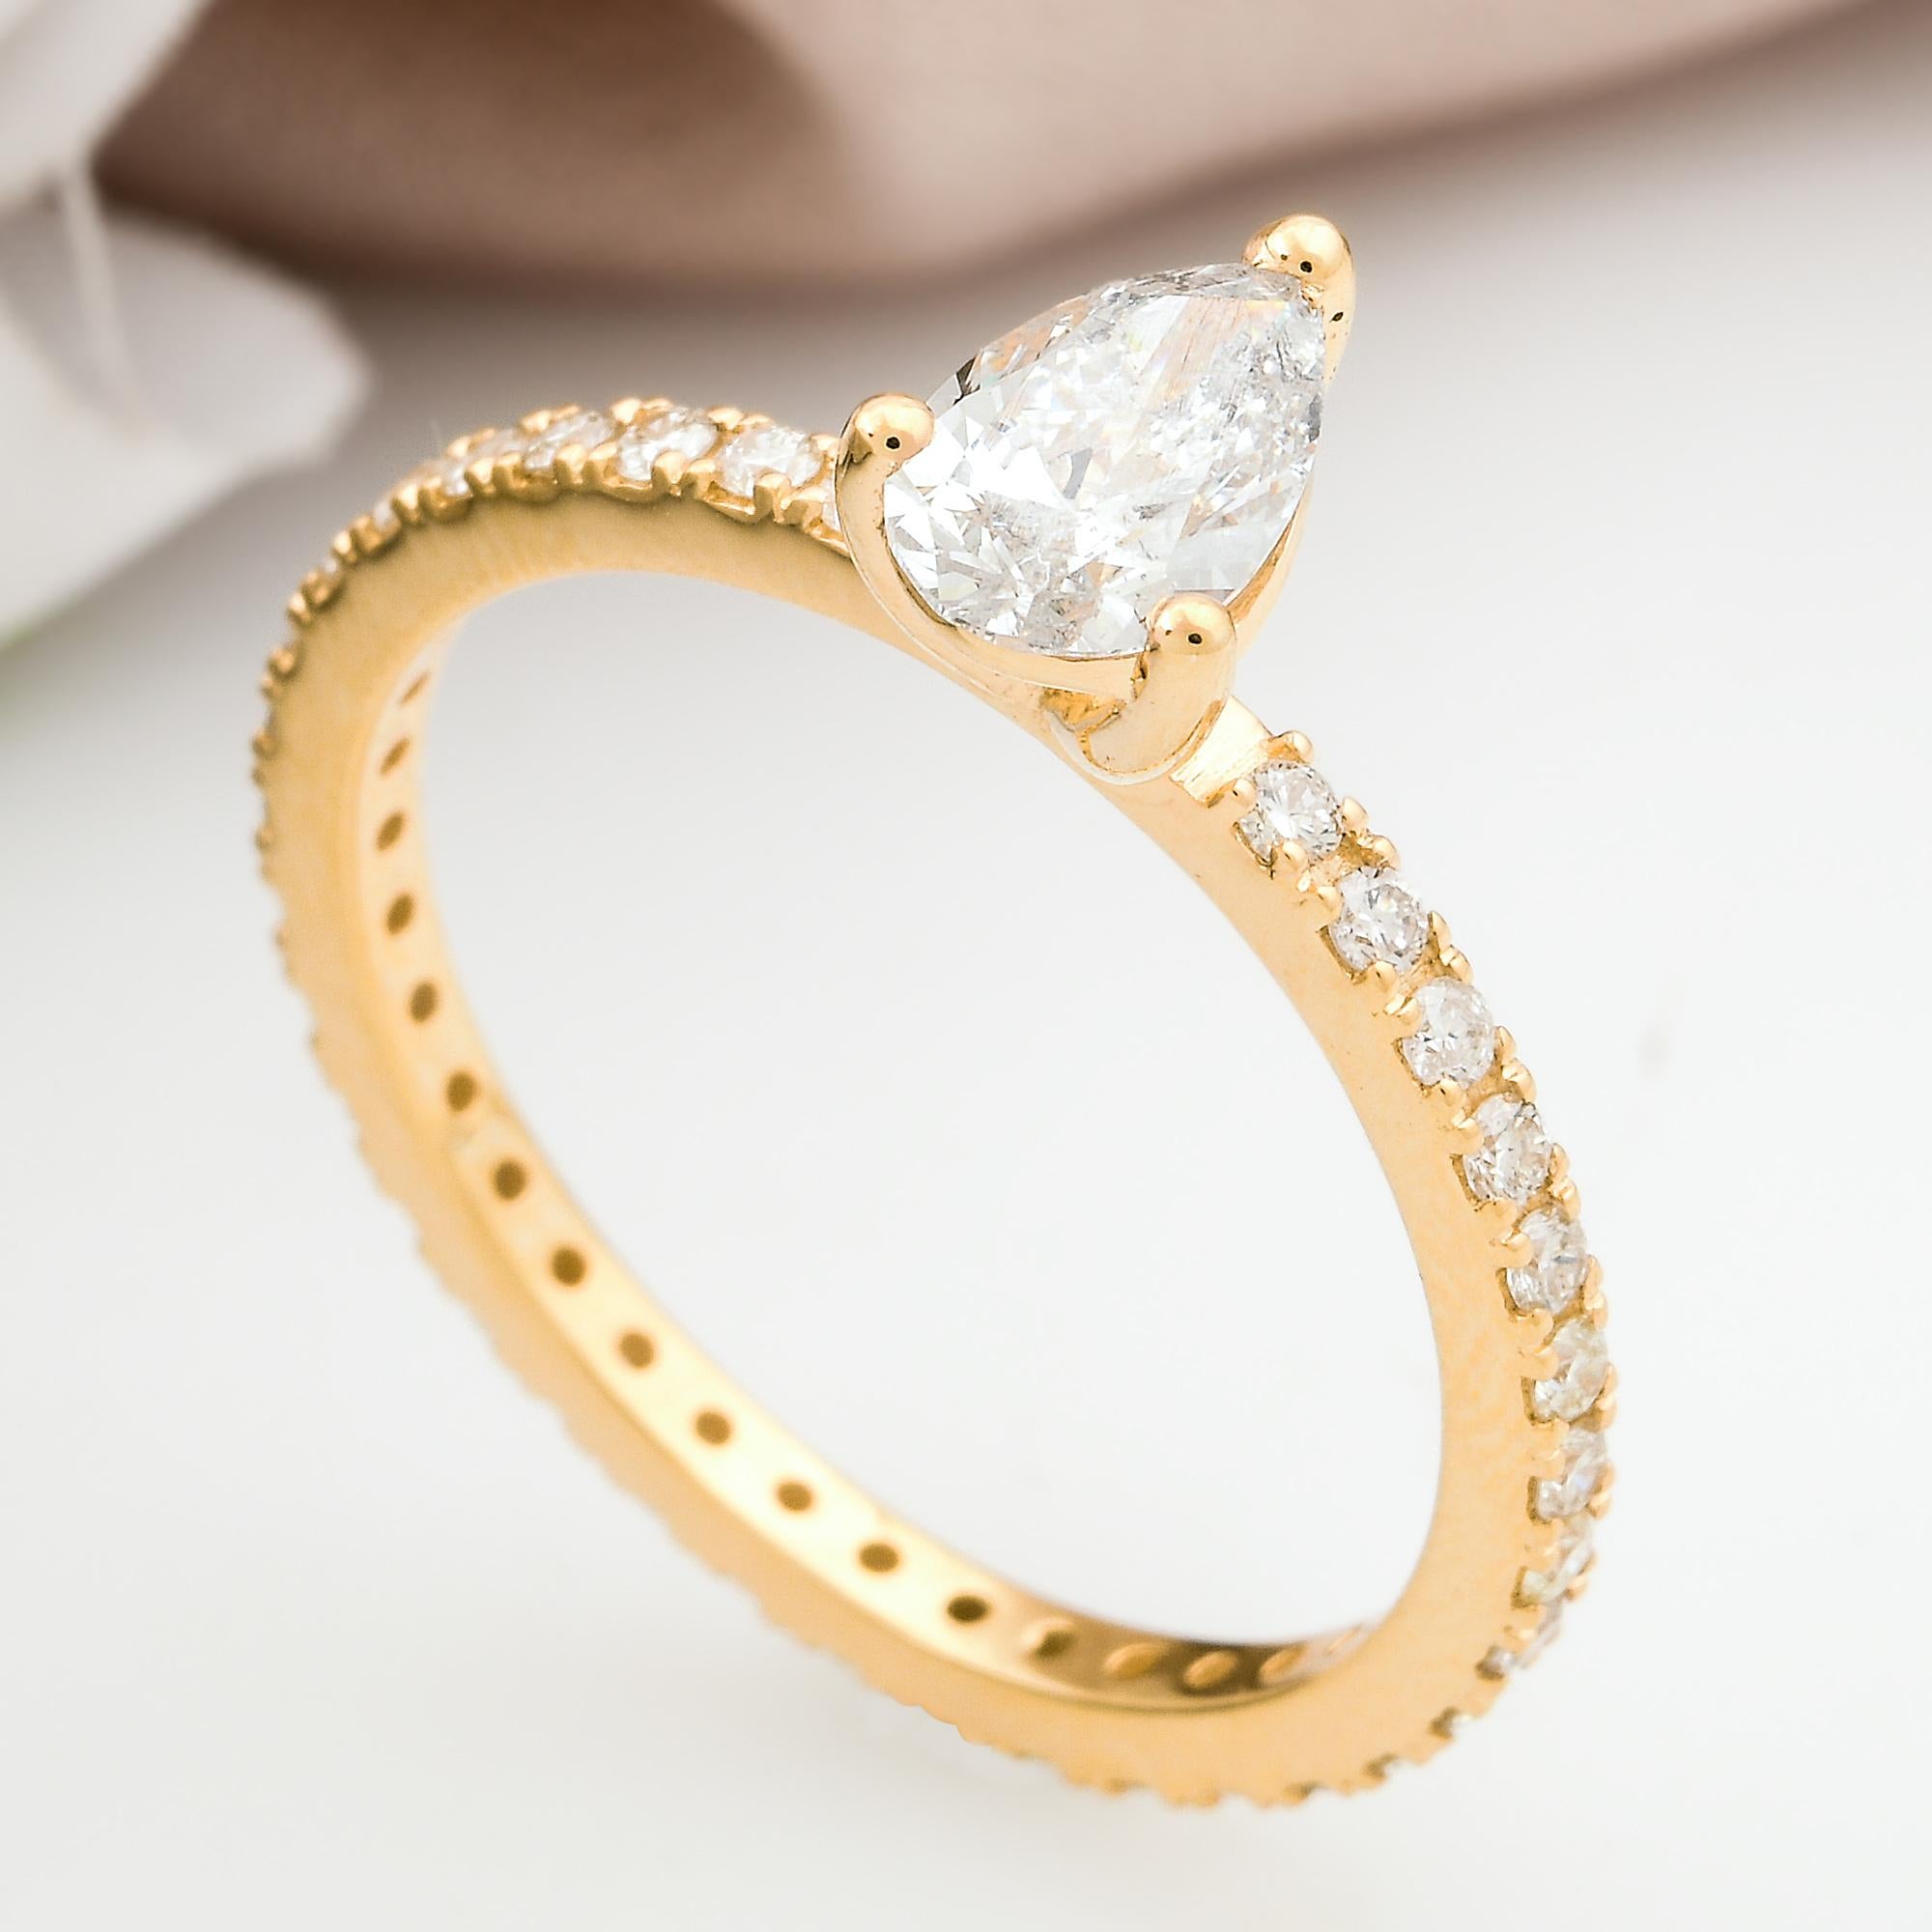 For Sale:  0.91 Carat Pear Diamond Band Ring Solid 14 Karat Yellow Gold Handmade Jewelry 4